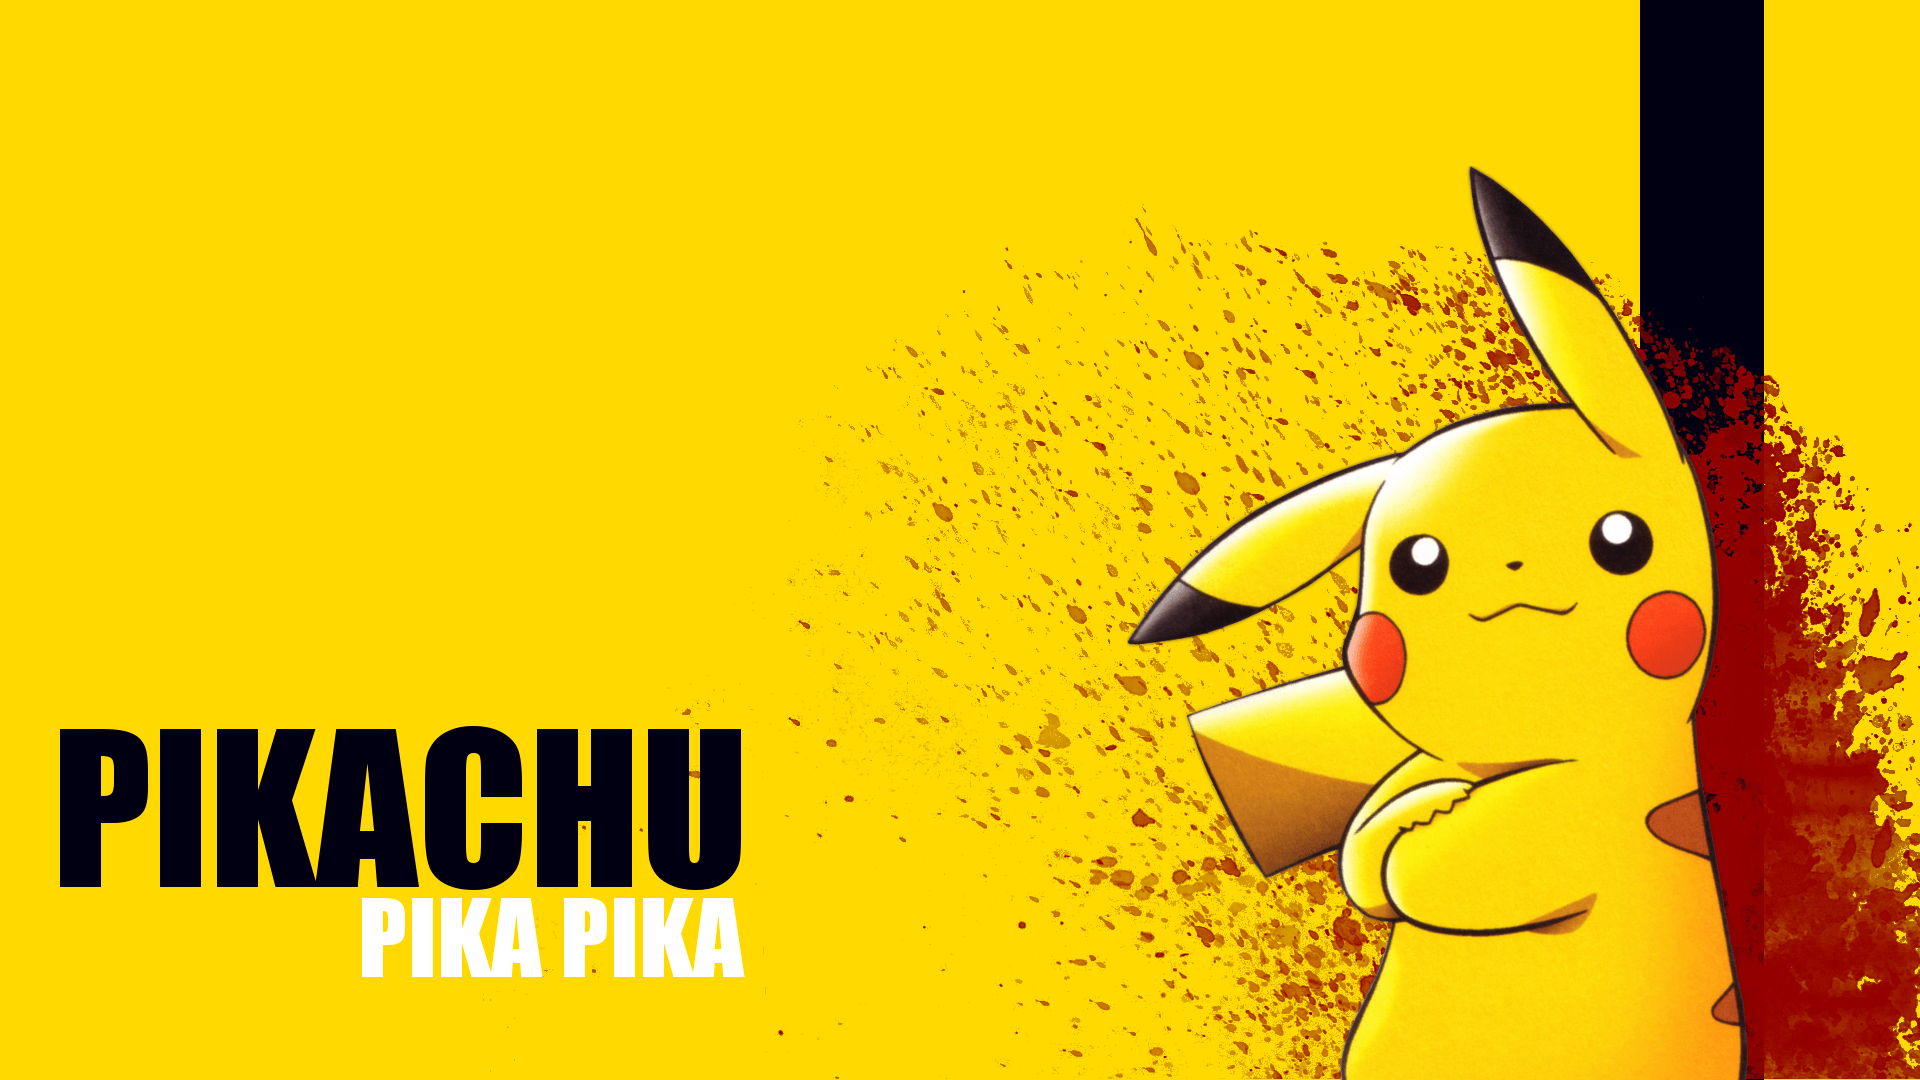 Pikachu hd wallpapers free download